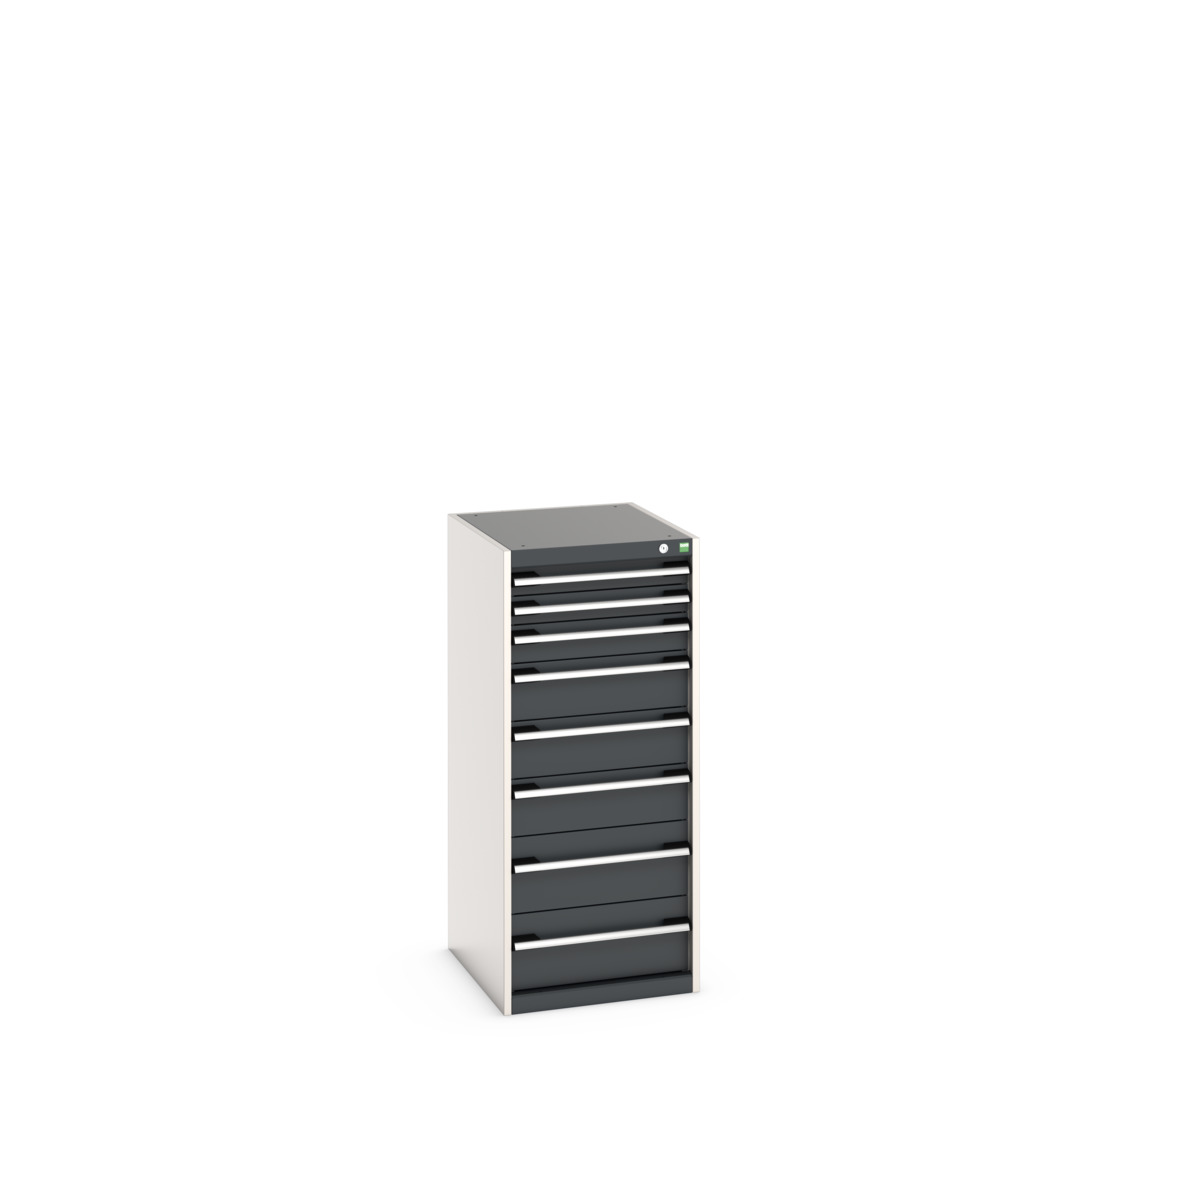 40018069. - cubio drawer cabinet